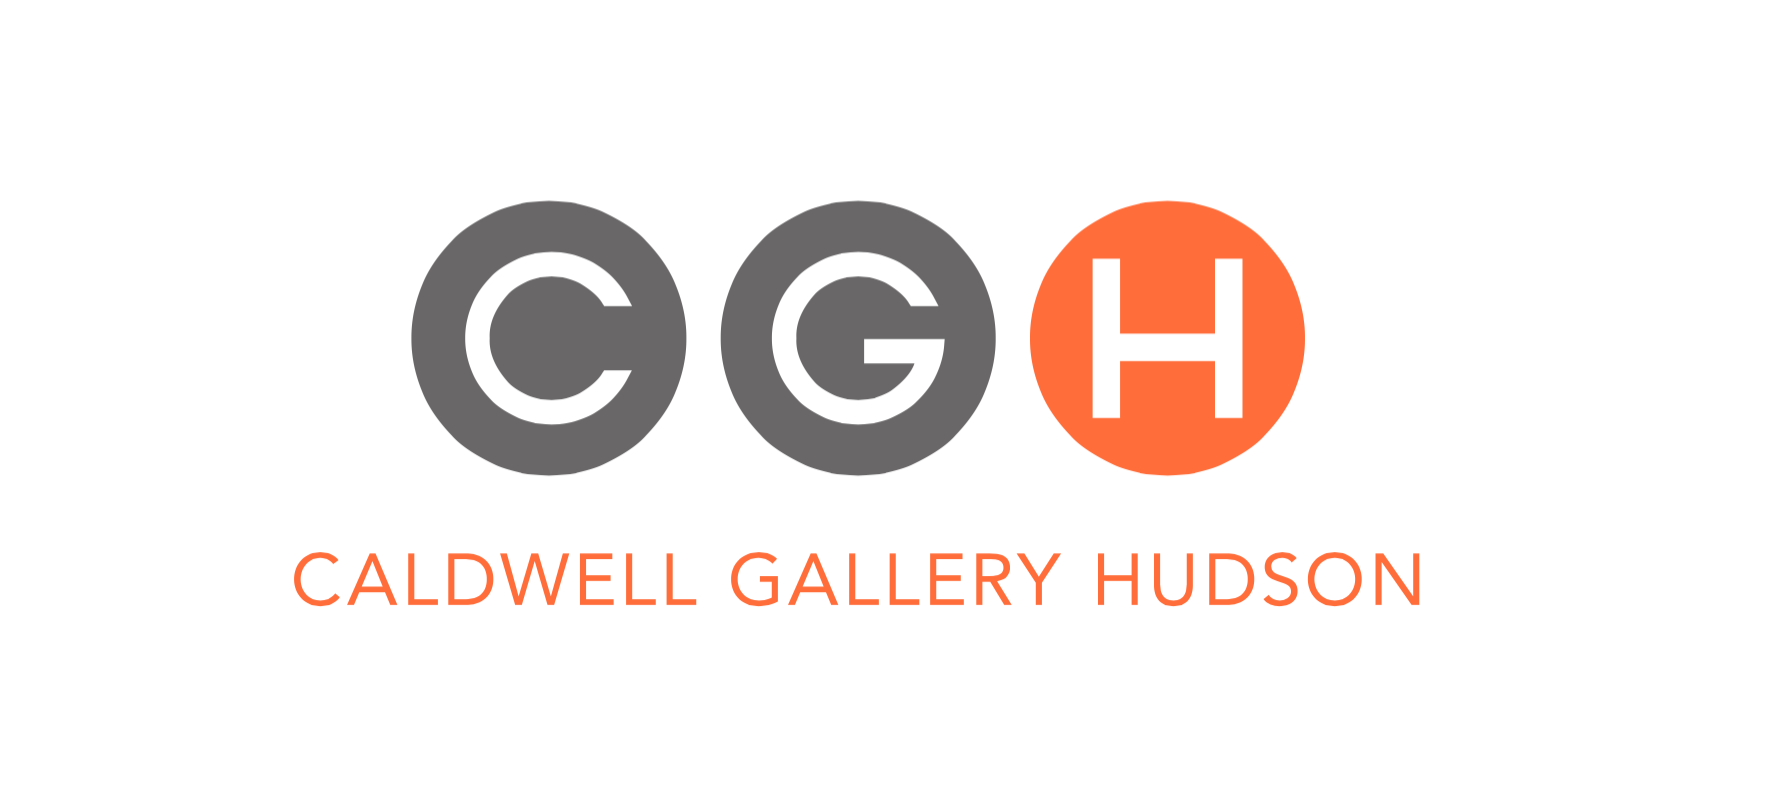 Caldwell Gallery Hudson